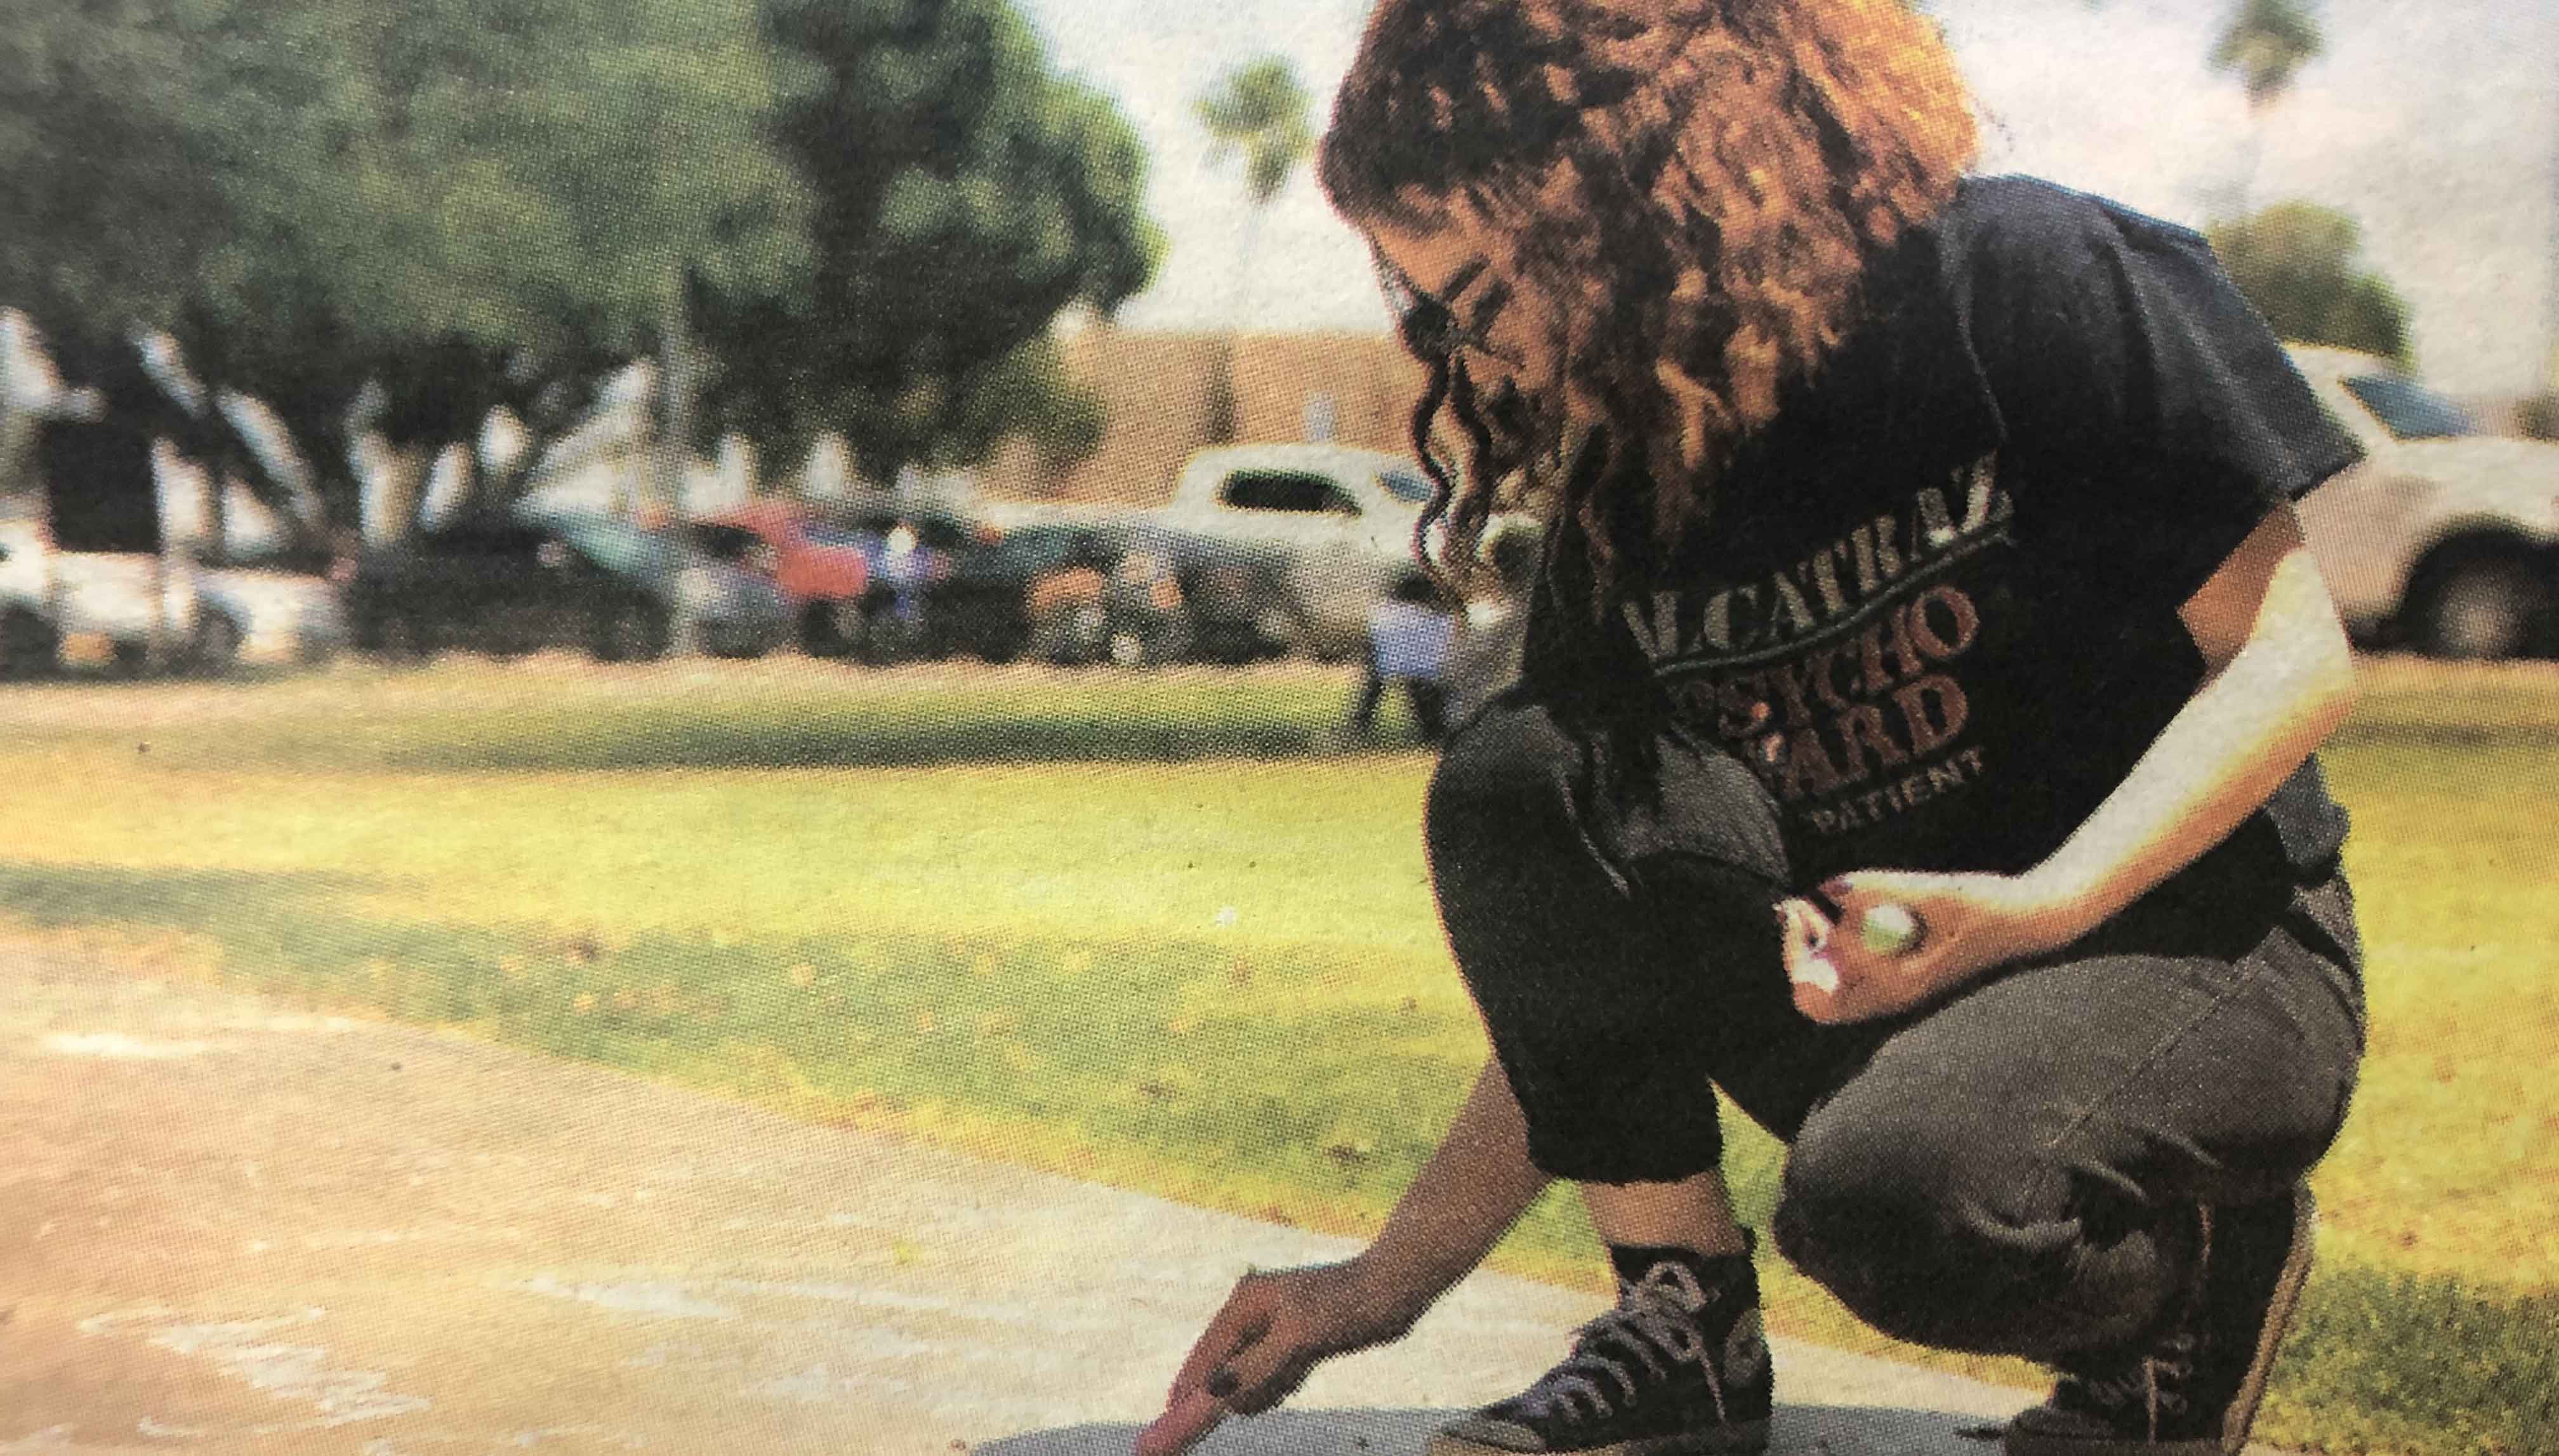 Student kneels down to write with chalk on school sidewalk